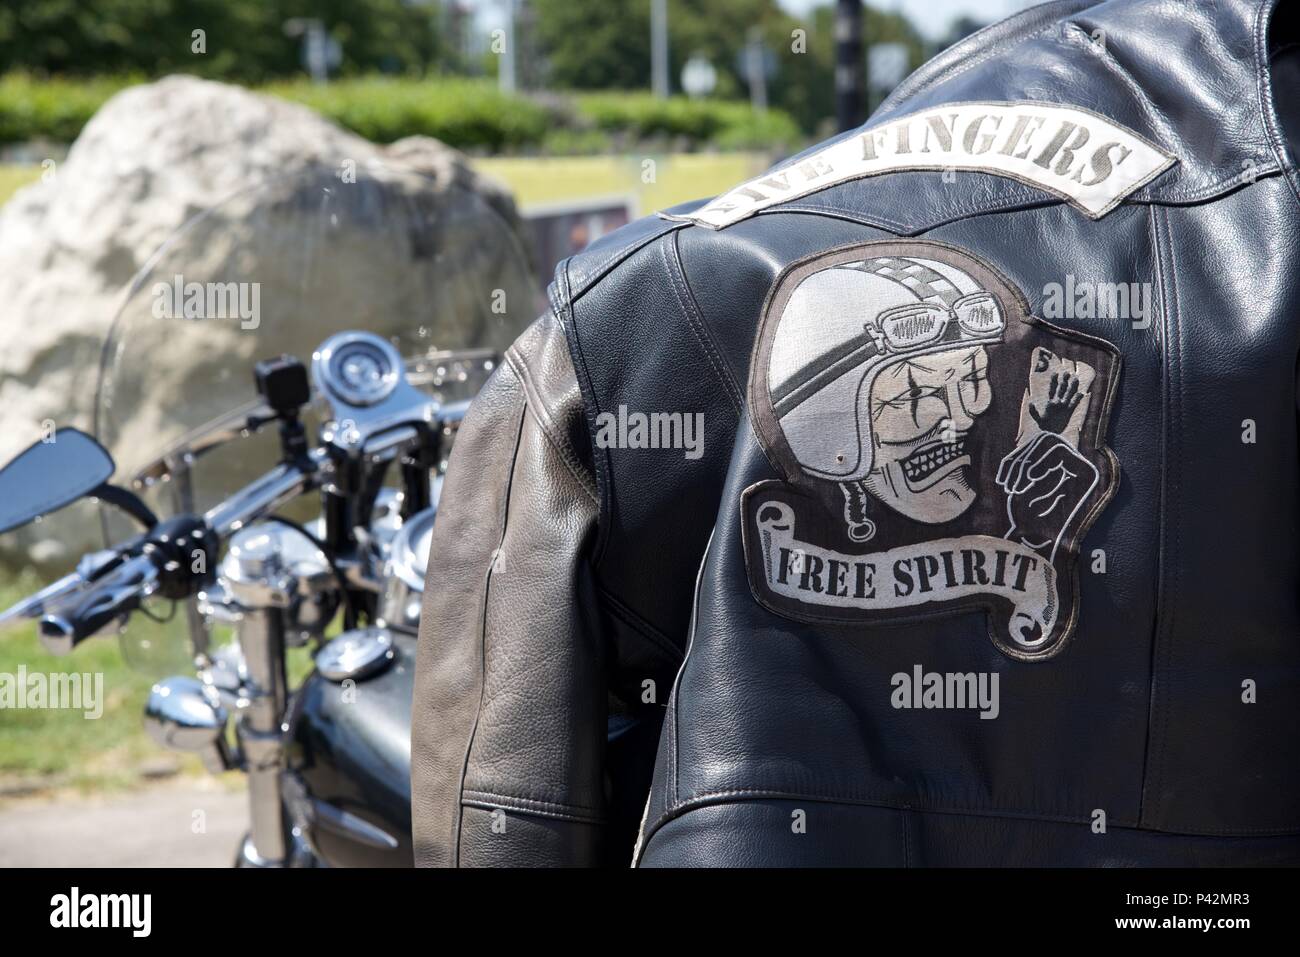 Harley Davidson: close ups and deatails of Harley Davidson motorcycles Stock Photo